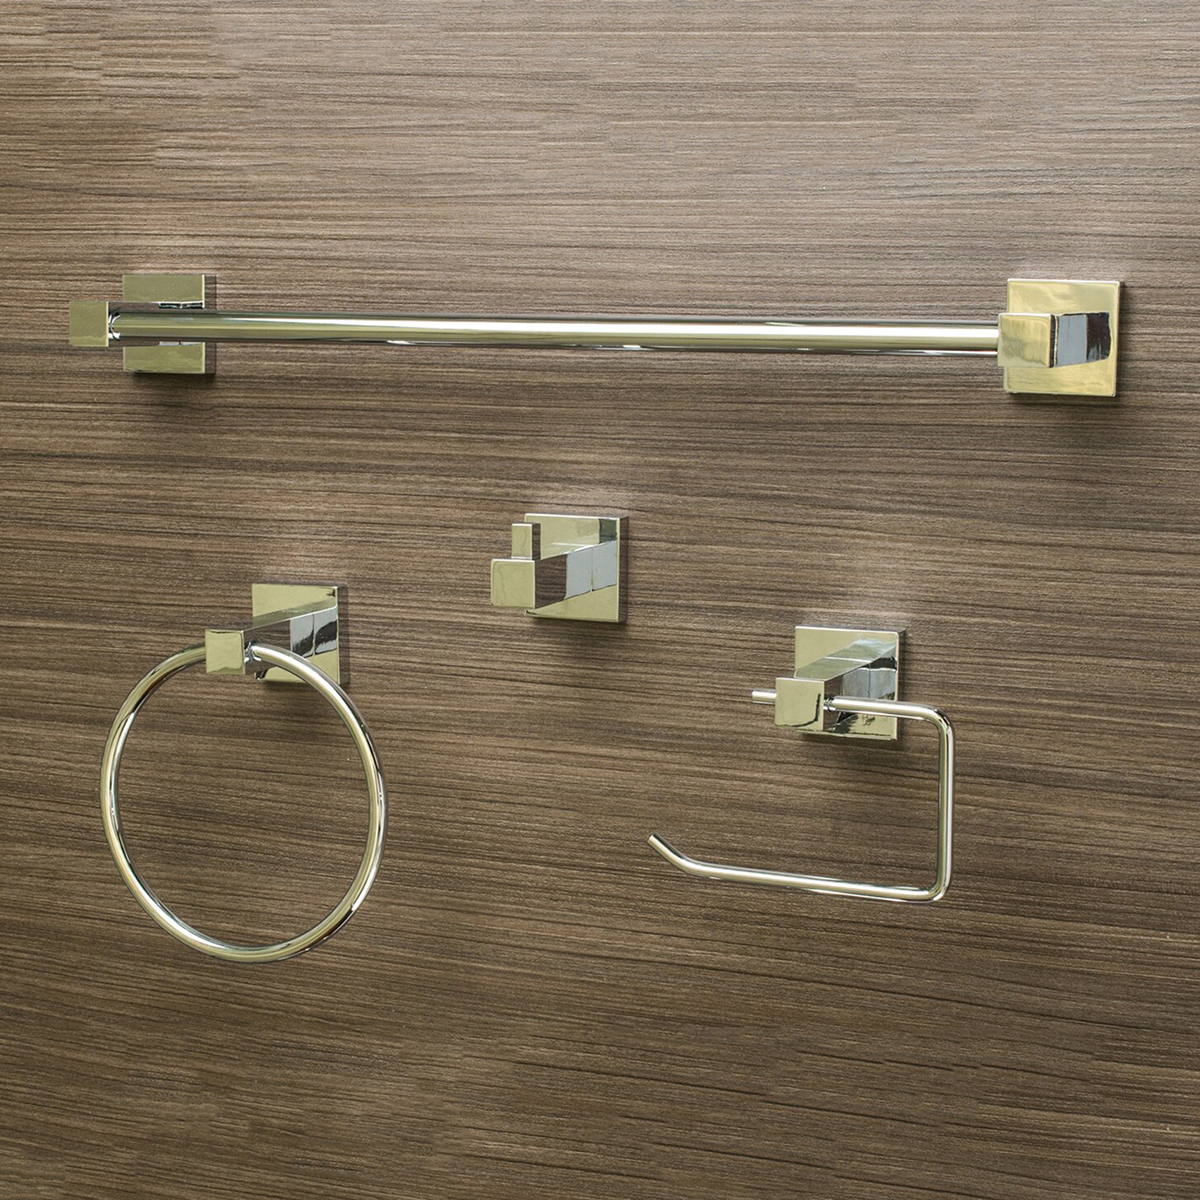 China fabrikant goedkope zinklegering 4-delige badkamer hardware set badkameraccessoires